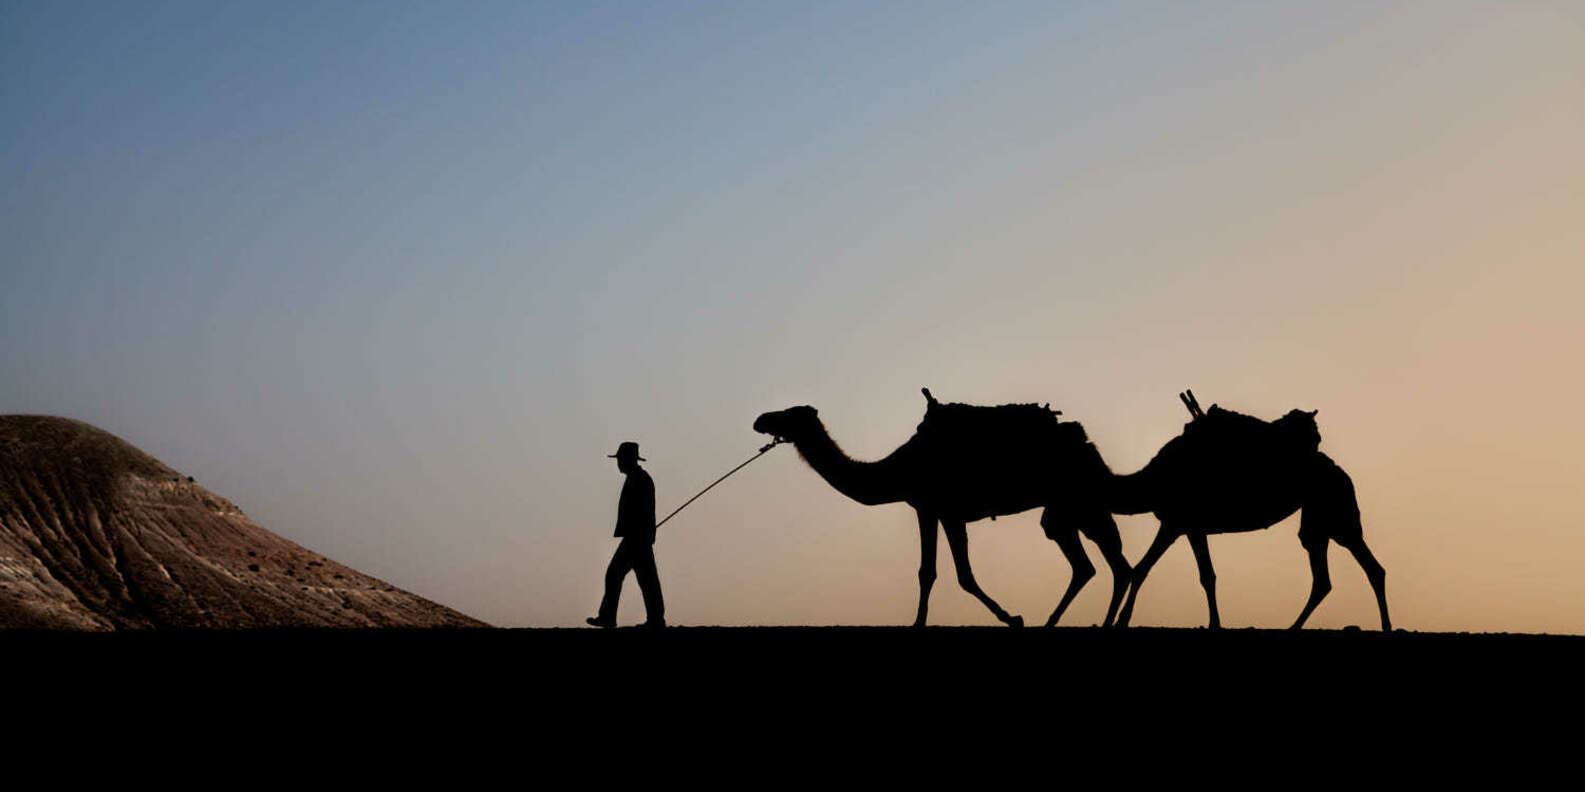 Activity Sunset Camel Ride In Agafay Desert